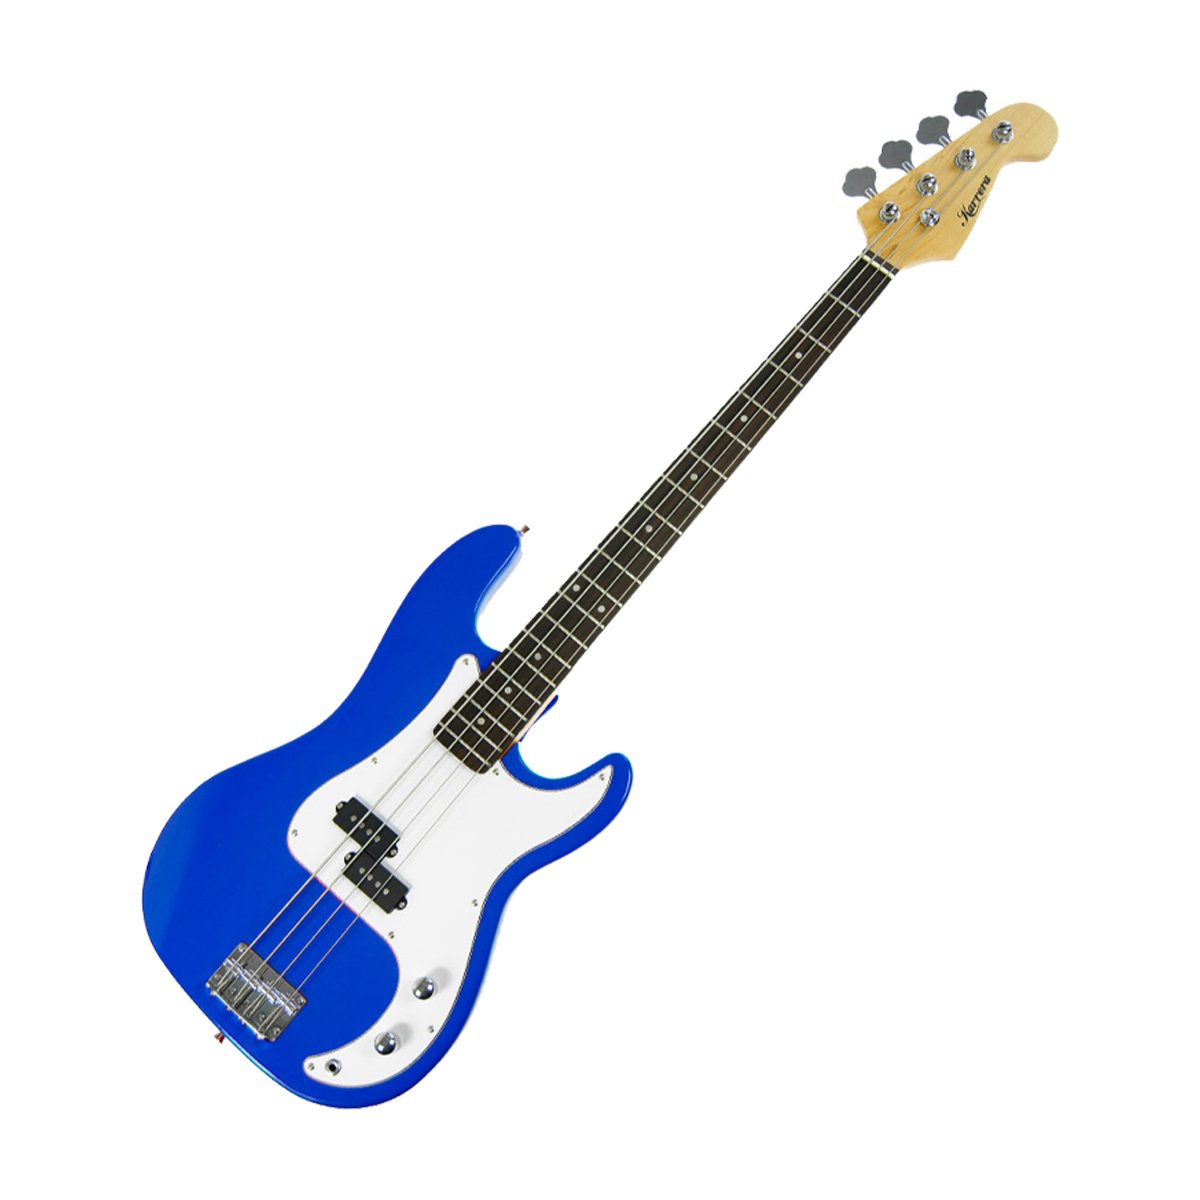 Karrera Electric Bass Guitar Pack - Blue 2